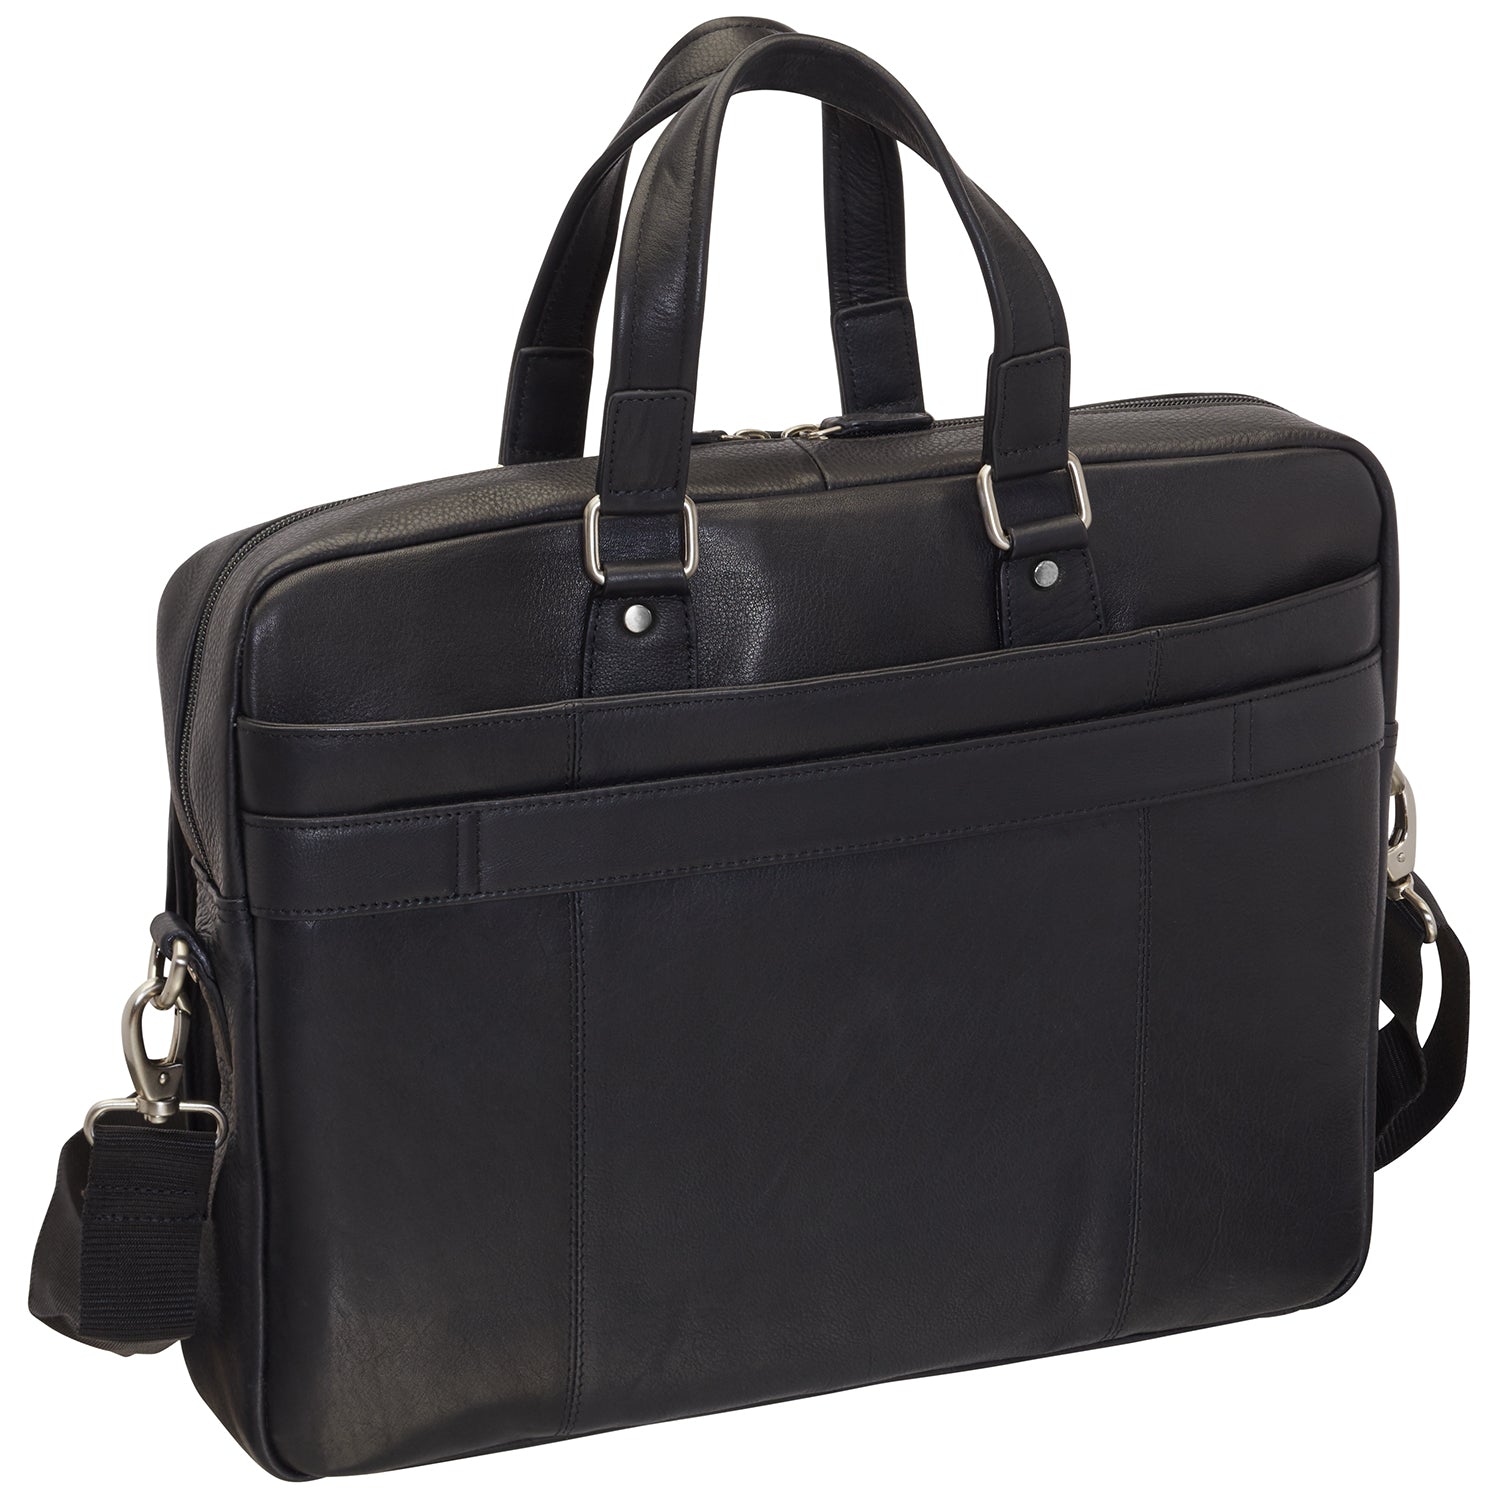 Mancini Leather Slim Laptop/tablet Briefcase, 16.25" x 2.5" x 12", Black